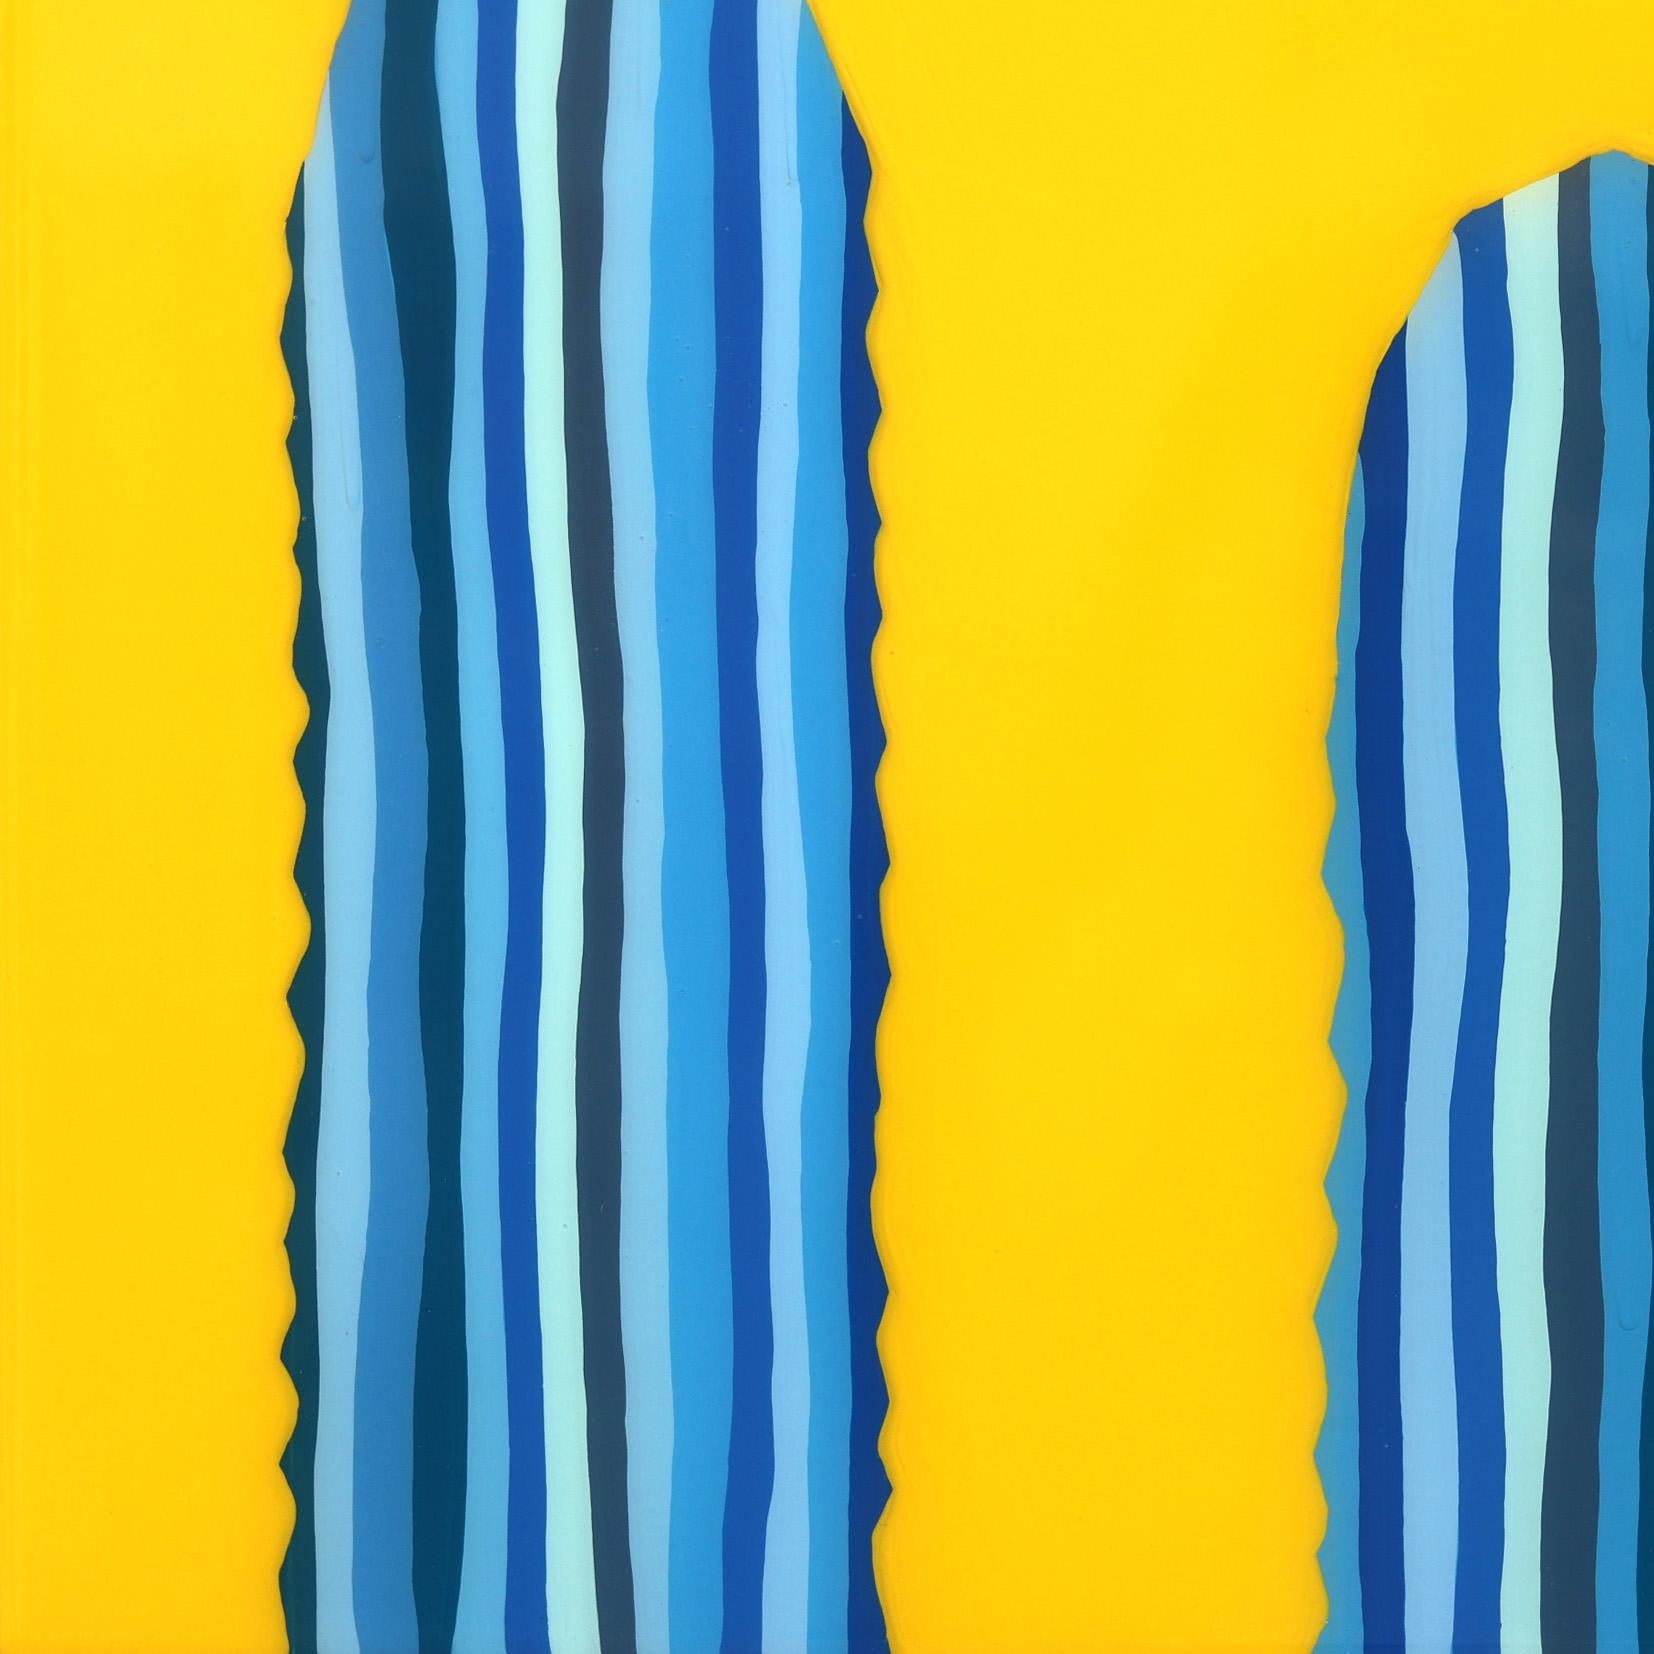 Mañana Amarilla- Peinture pop art de cactus d'un jaune bleu vibrant inspirée du sud-ouest en vente 2